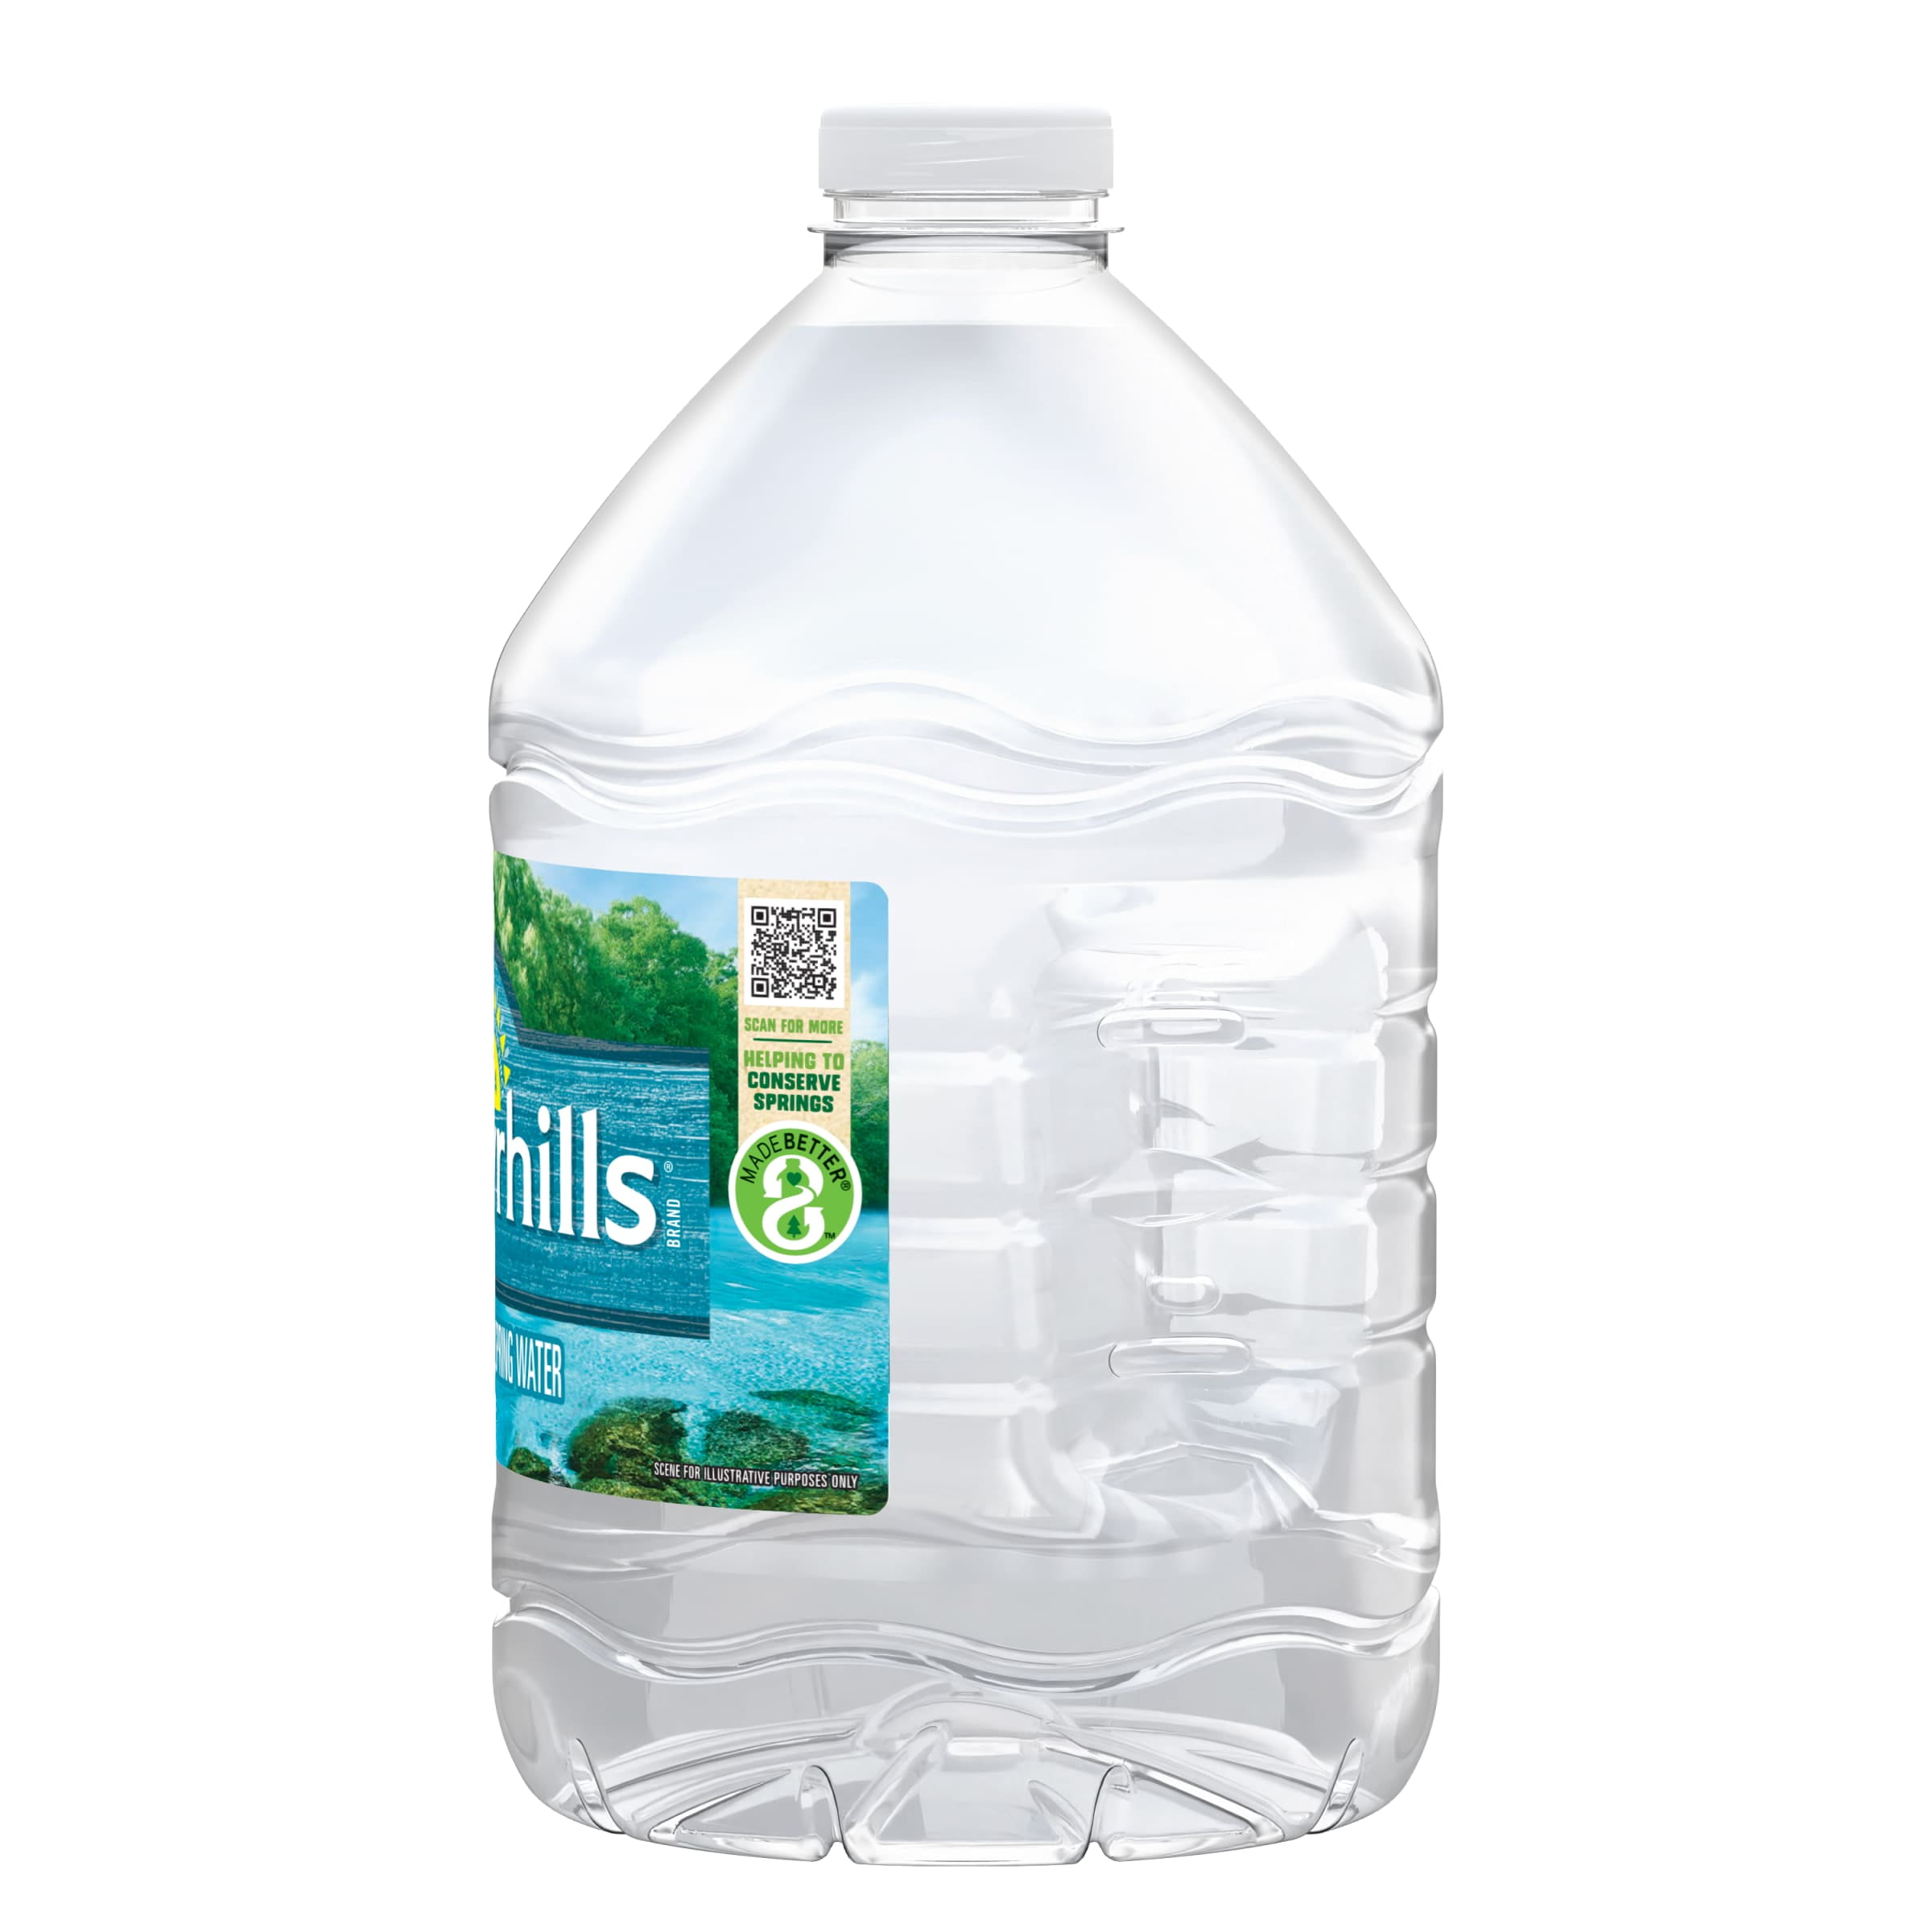 20 Fluid Ounce Bottled Water  Zephyrhills® Brand 100% Natural Spring Water